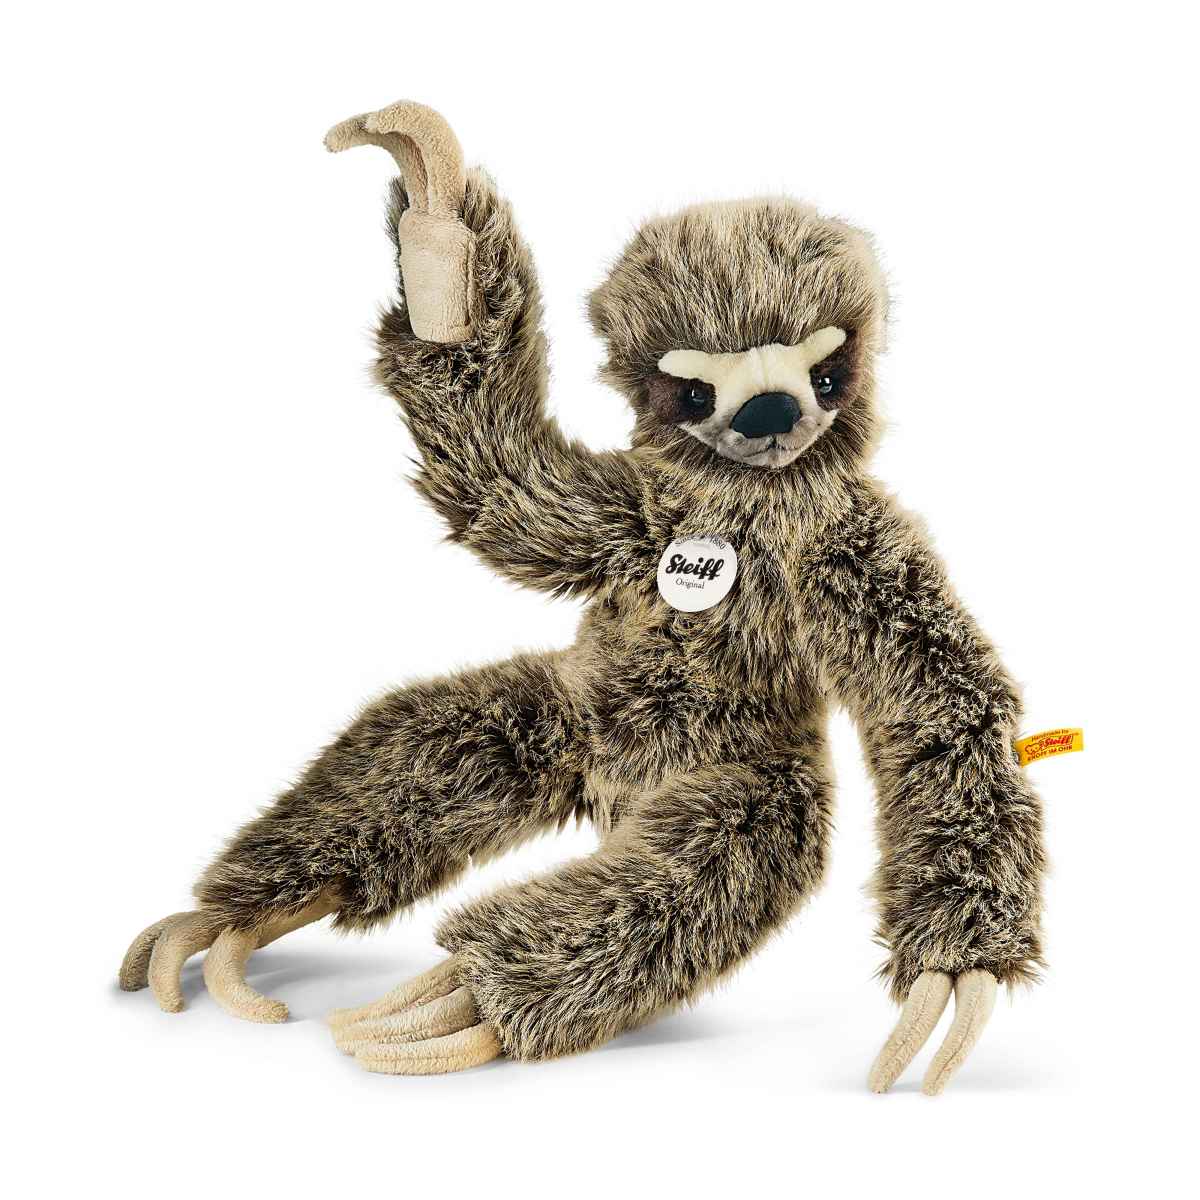 Мягкая игрушка Steiff Eric dangling sloth коричневый мягкая игрушка steiff happy teddy bear коричневый